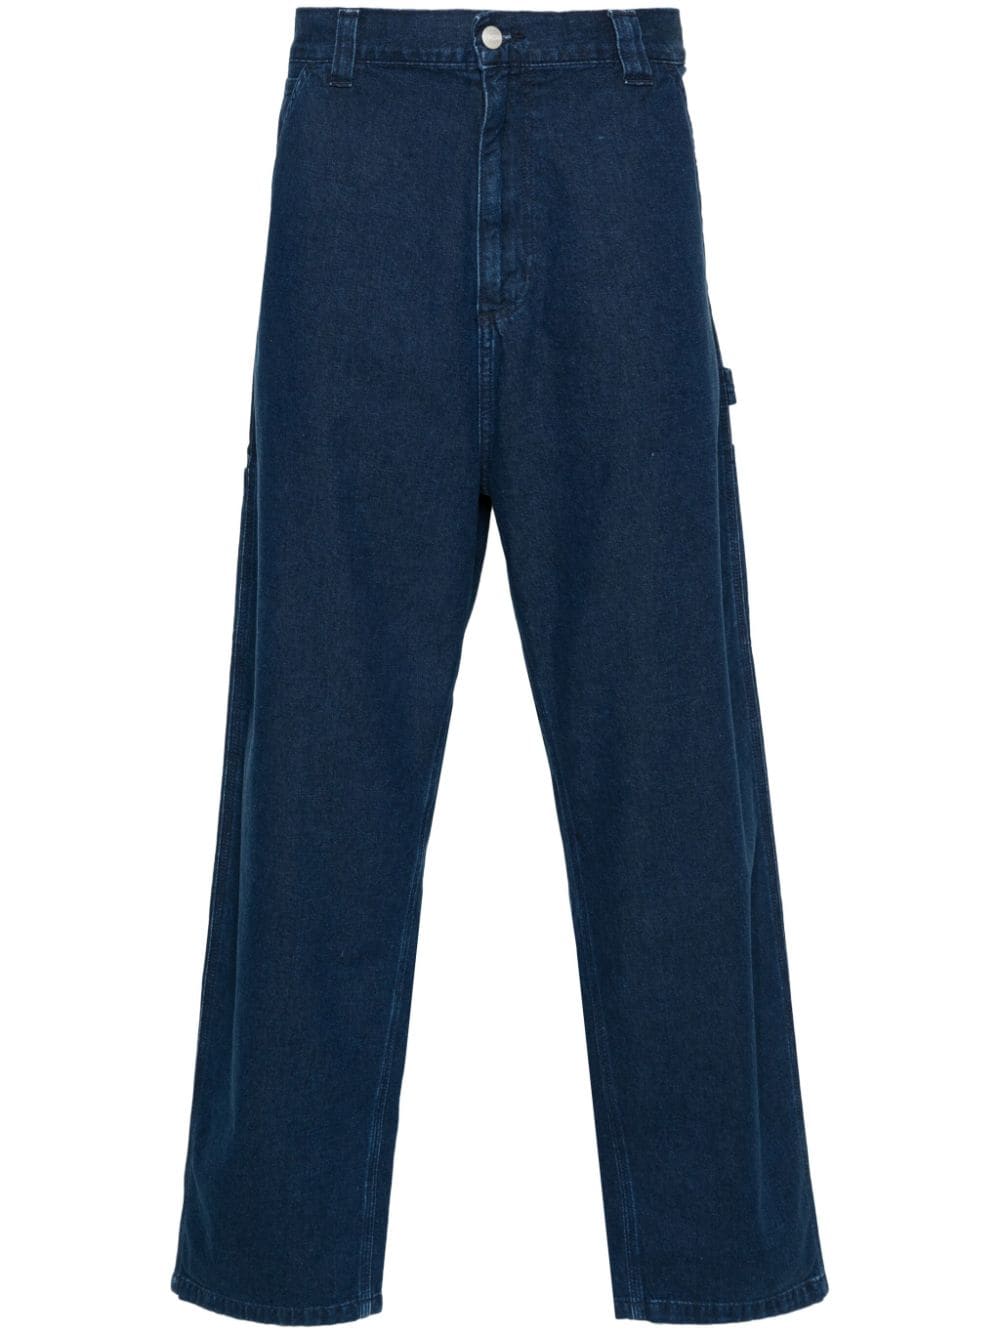 Carhartt WIP OG Single Knee Pant cotton jeans - Blue von Carhartt WIP